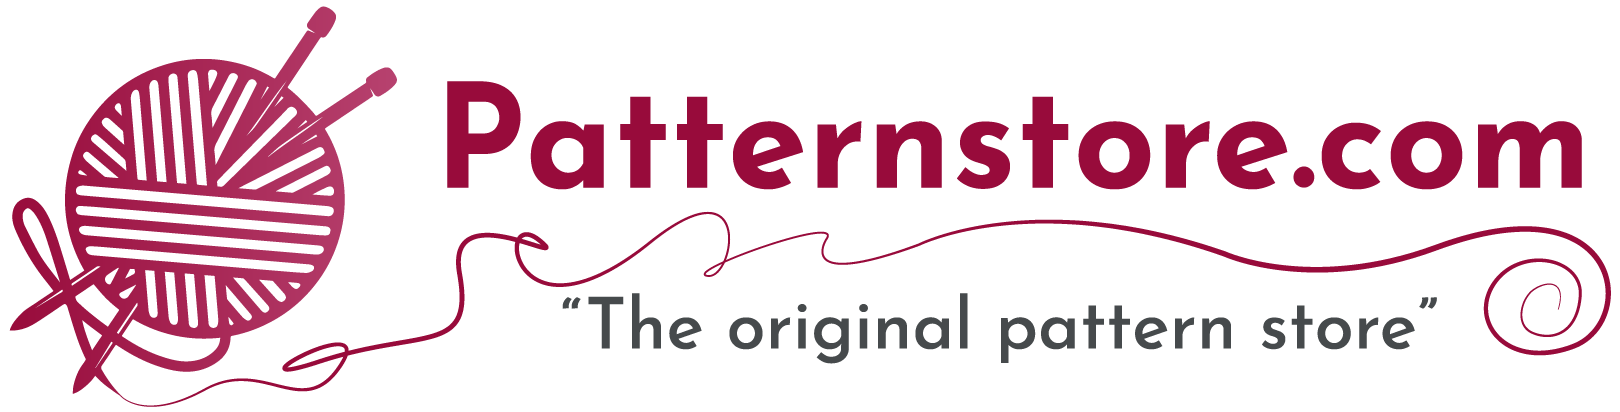 PatternStore.com